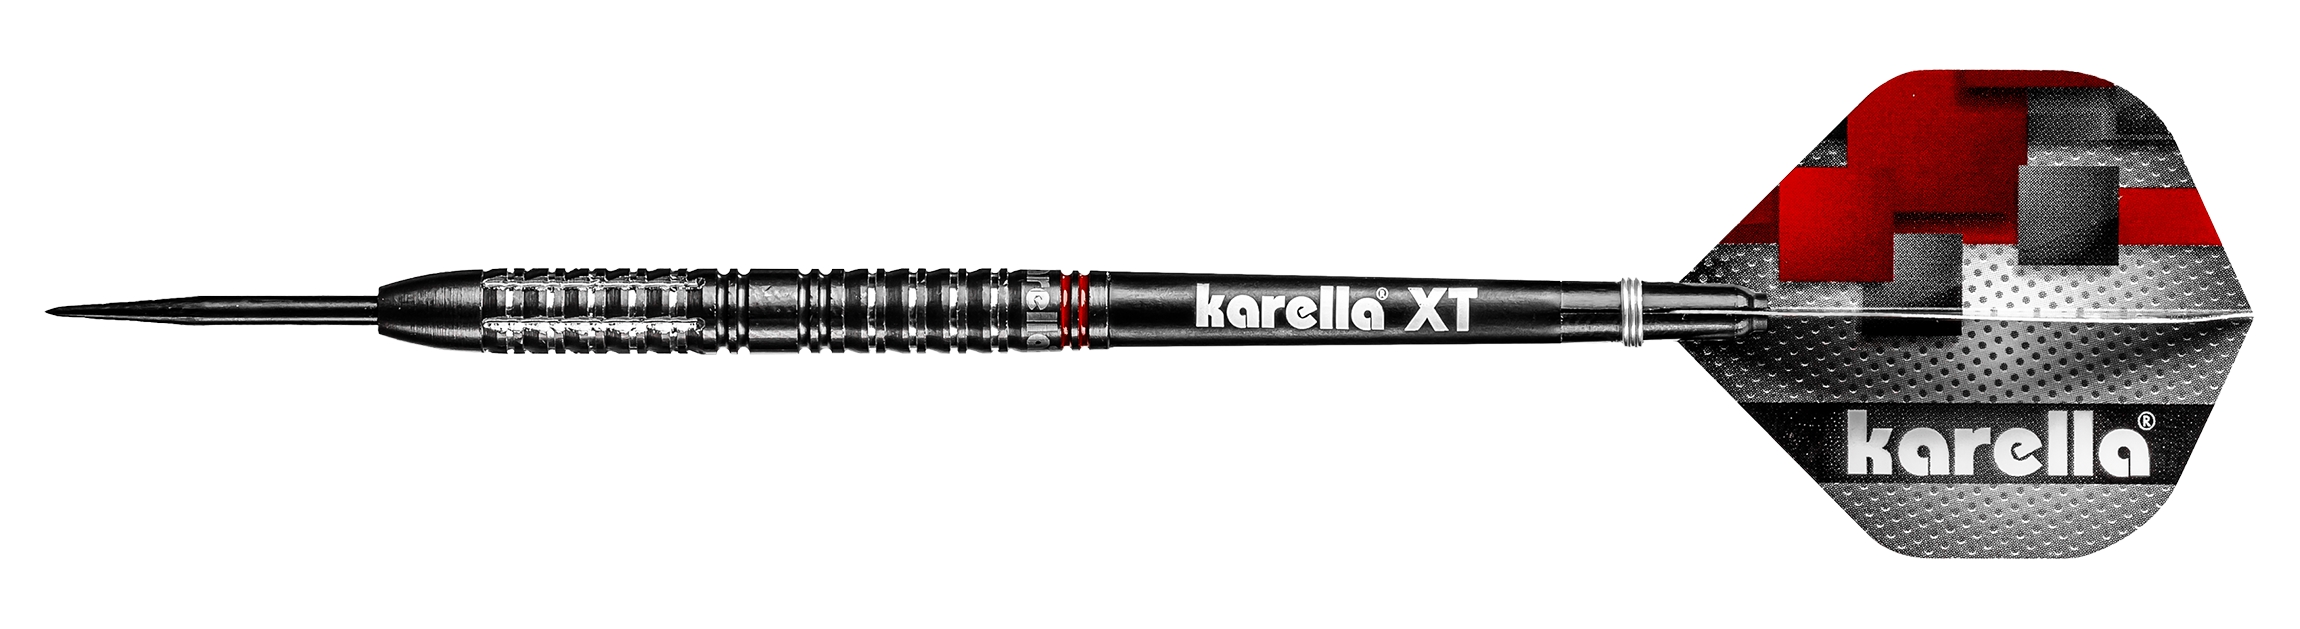 SuperDrive Karella - Steeldart